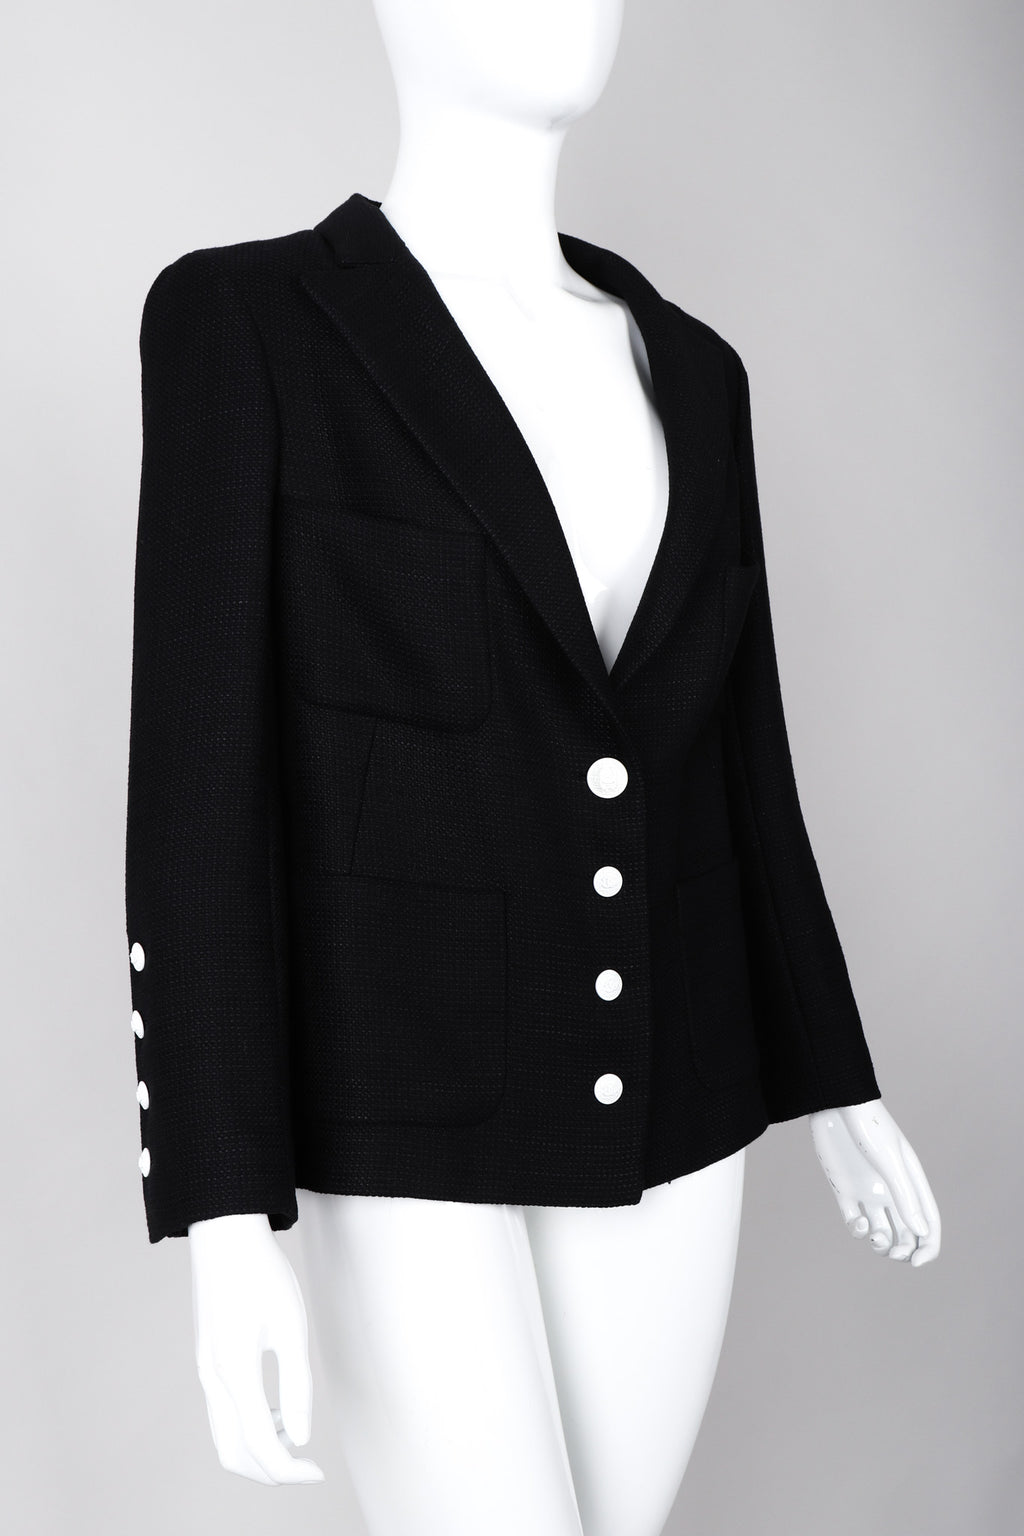 chanel white tweed blazer jacket